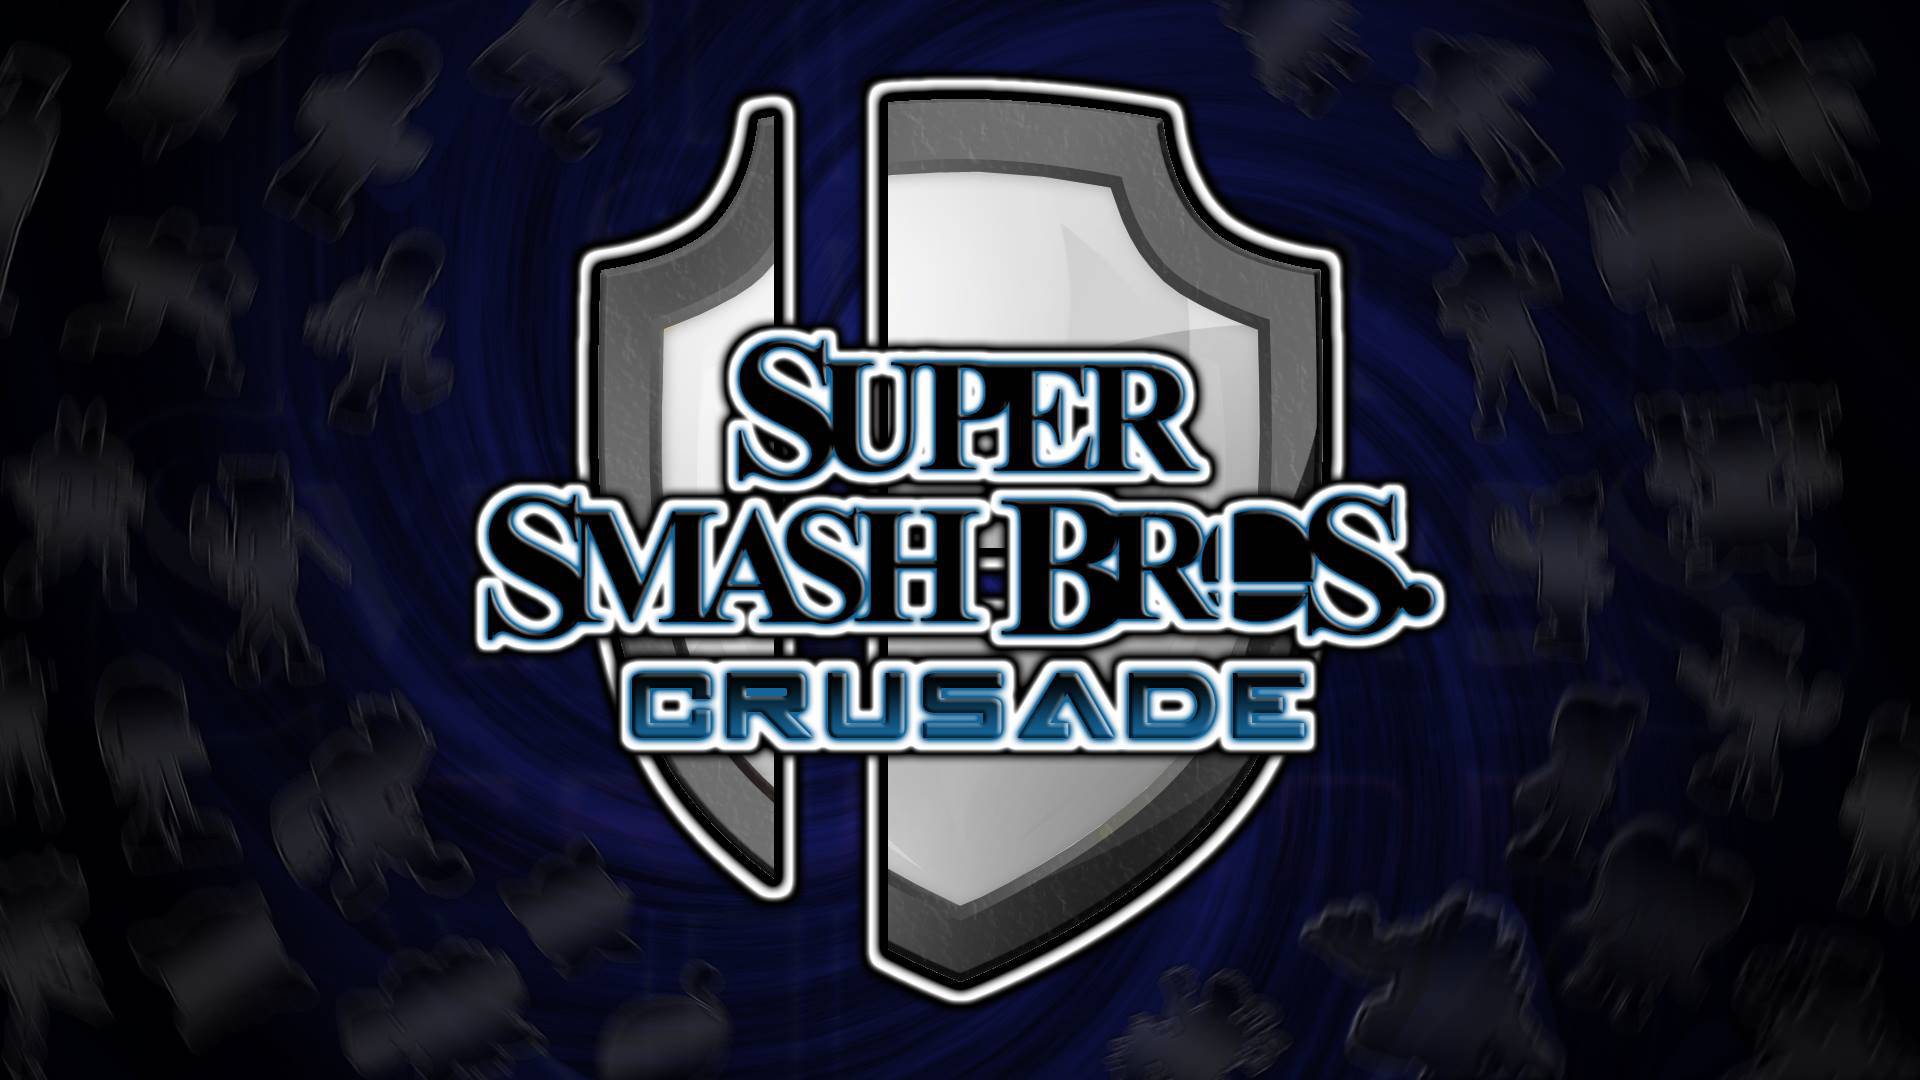 Super Smash Bros Crusade 0.9 - Download for PC Free